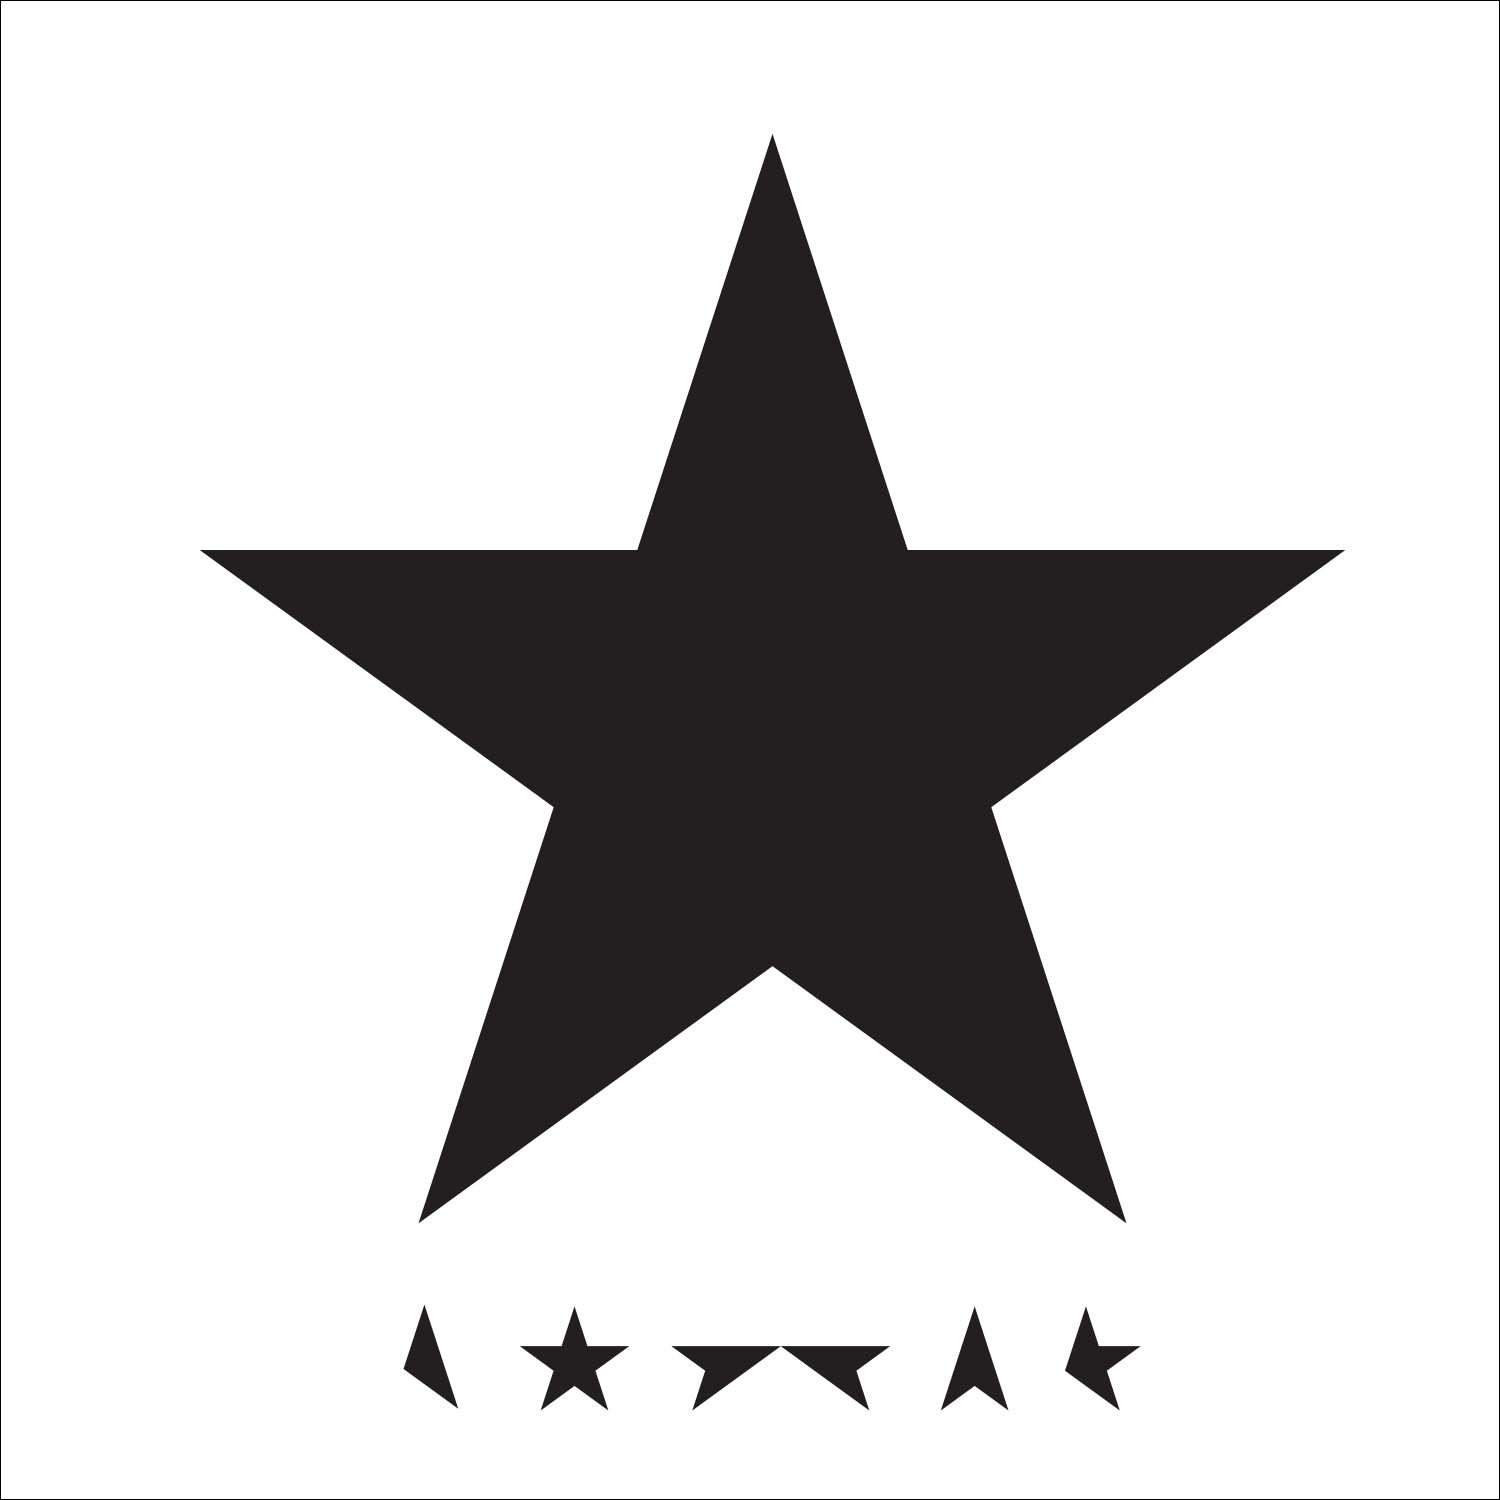 Album cover for Bowie's latest album Blackstar.